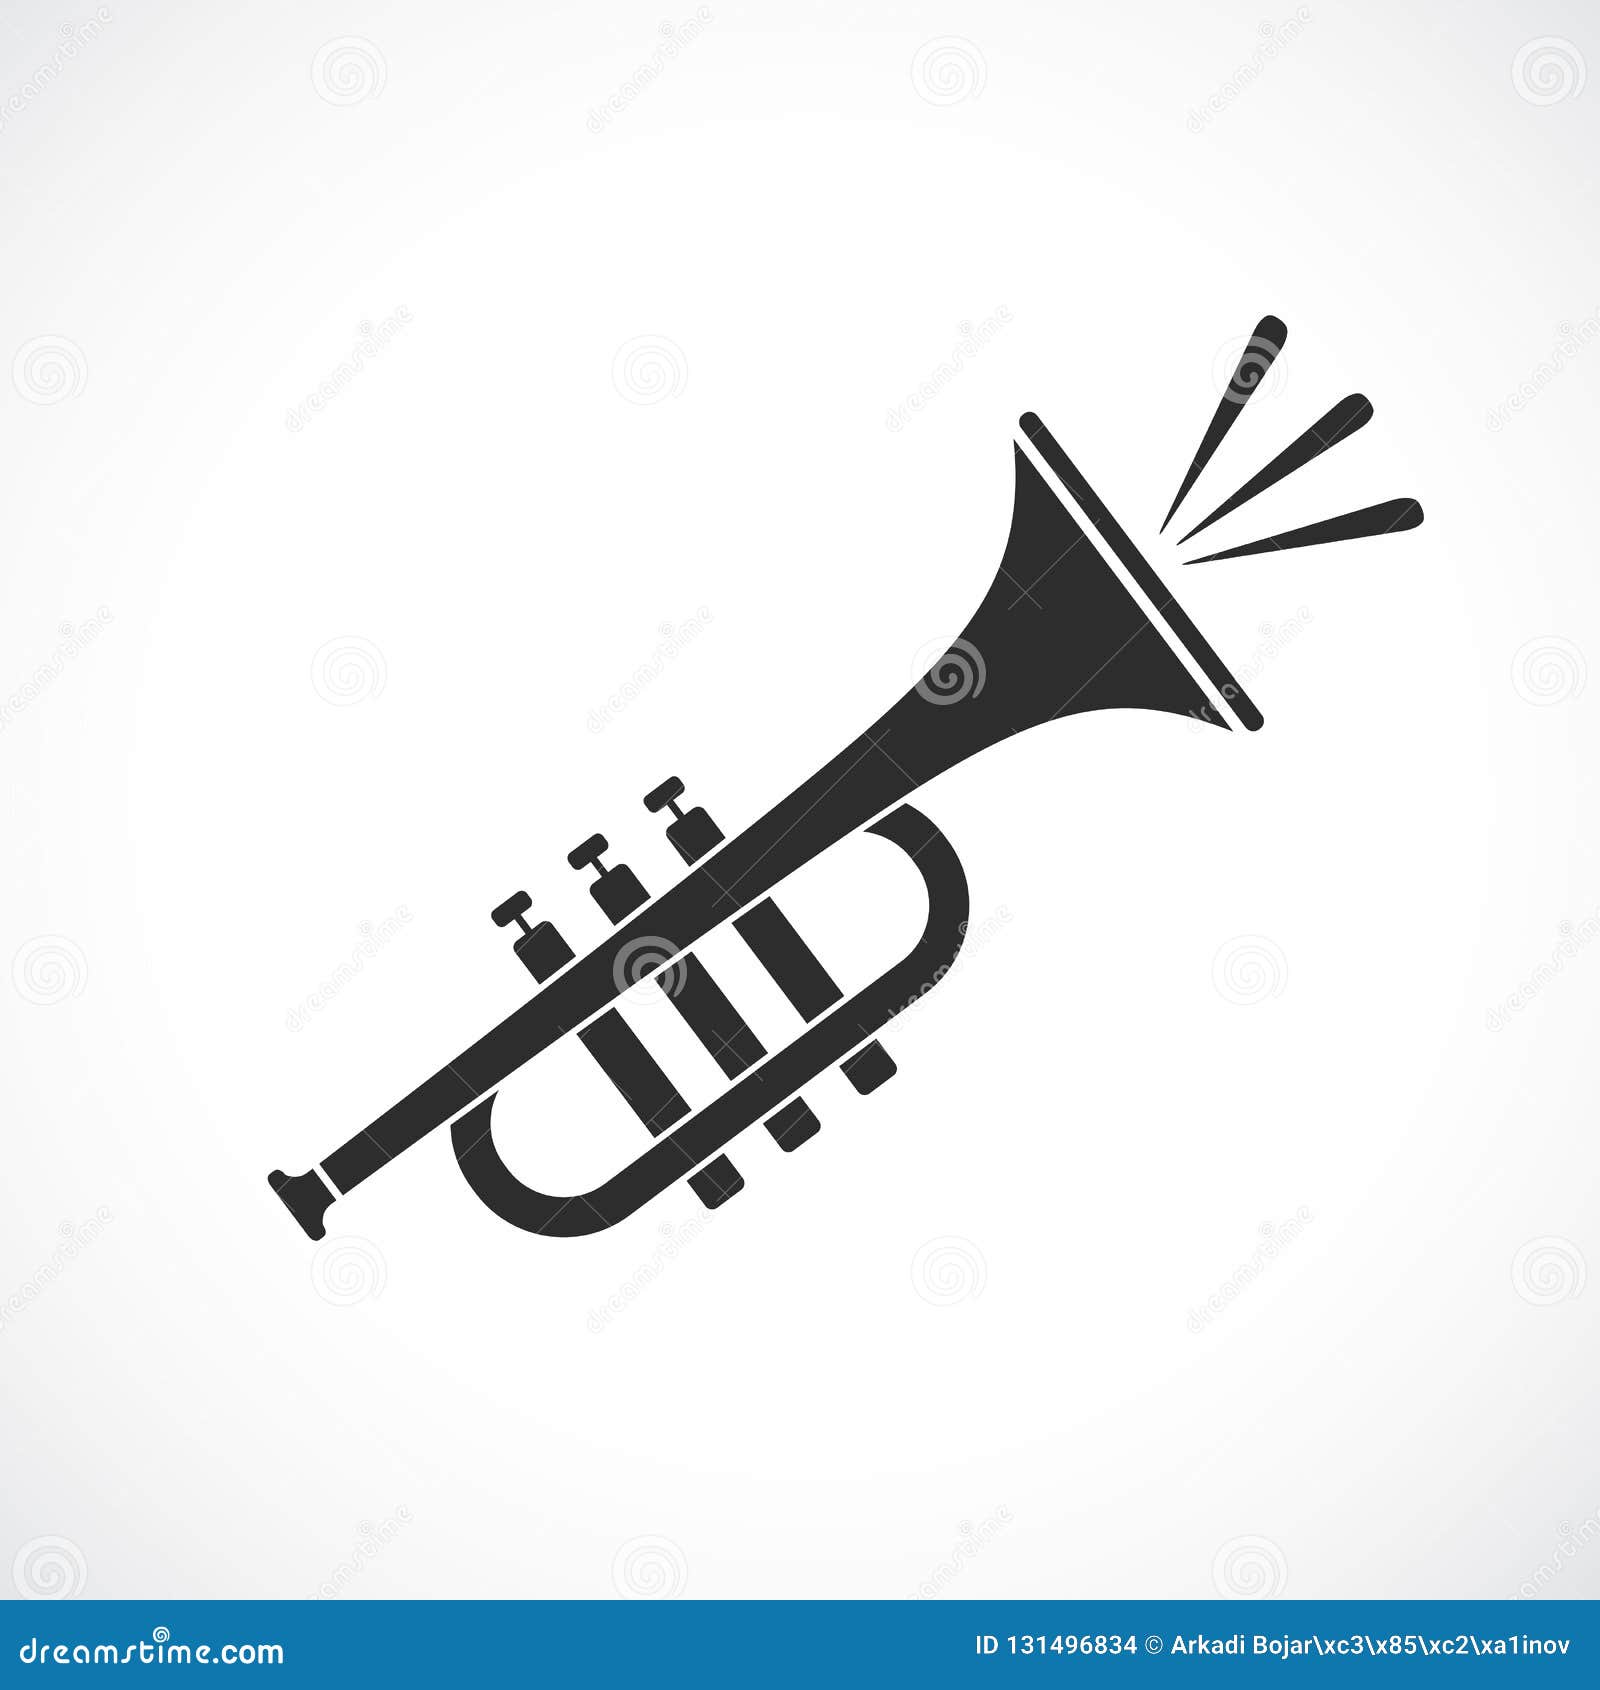 Trumpet vector icon stock vector. Illustration of flat - 131496834